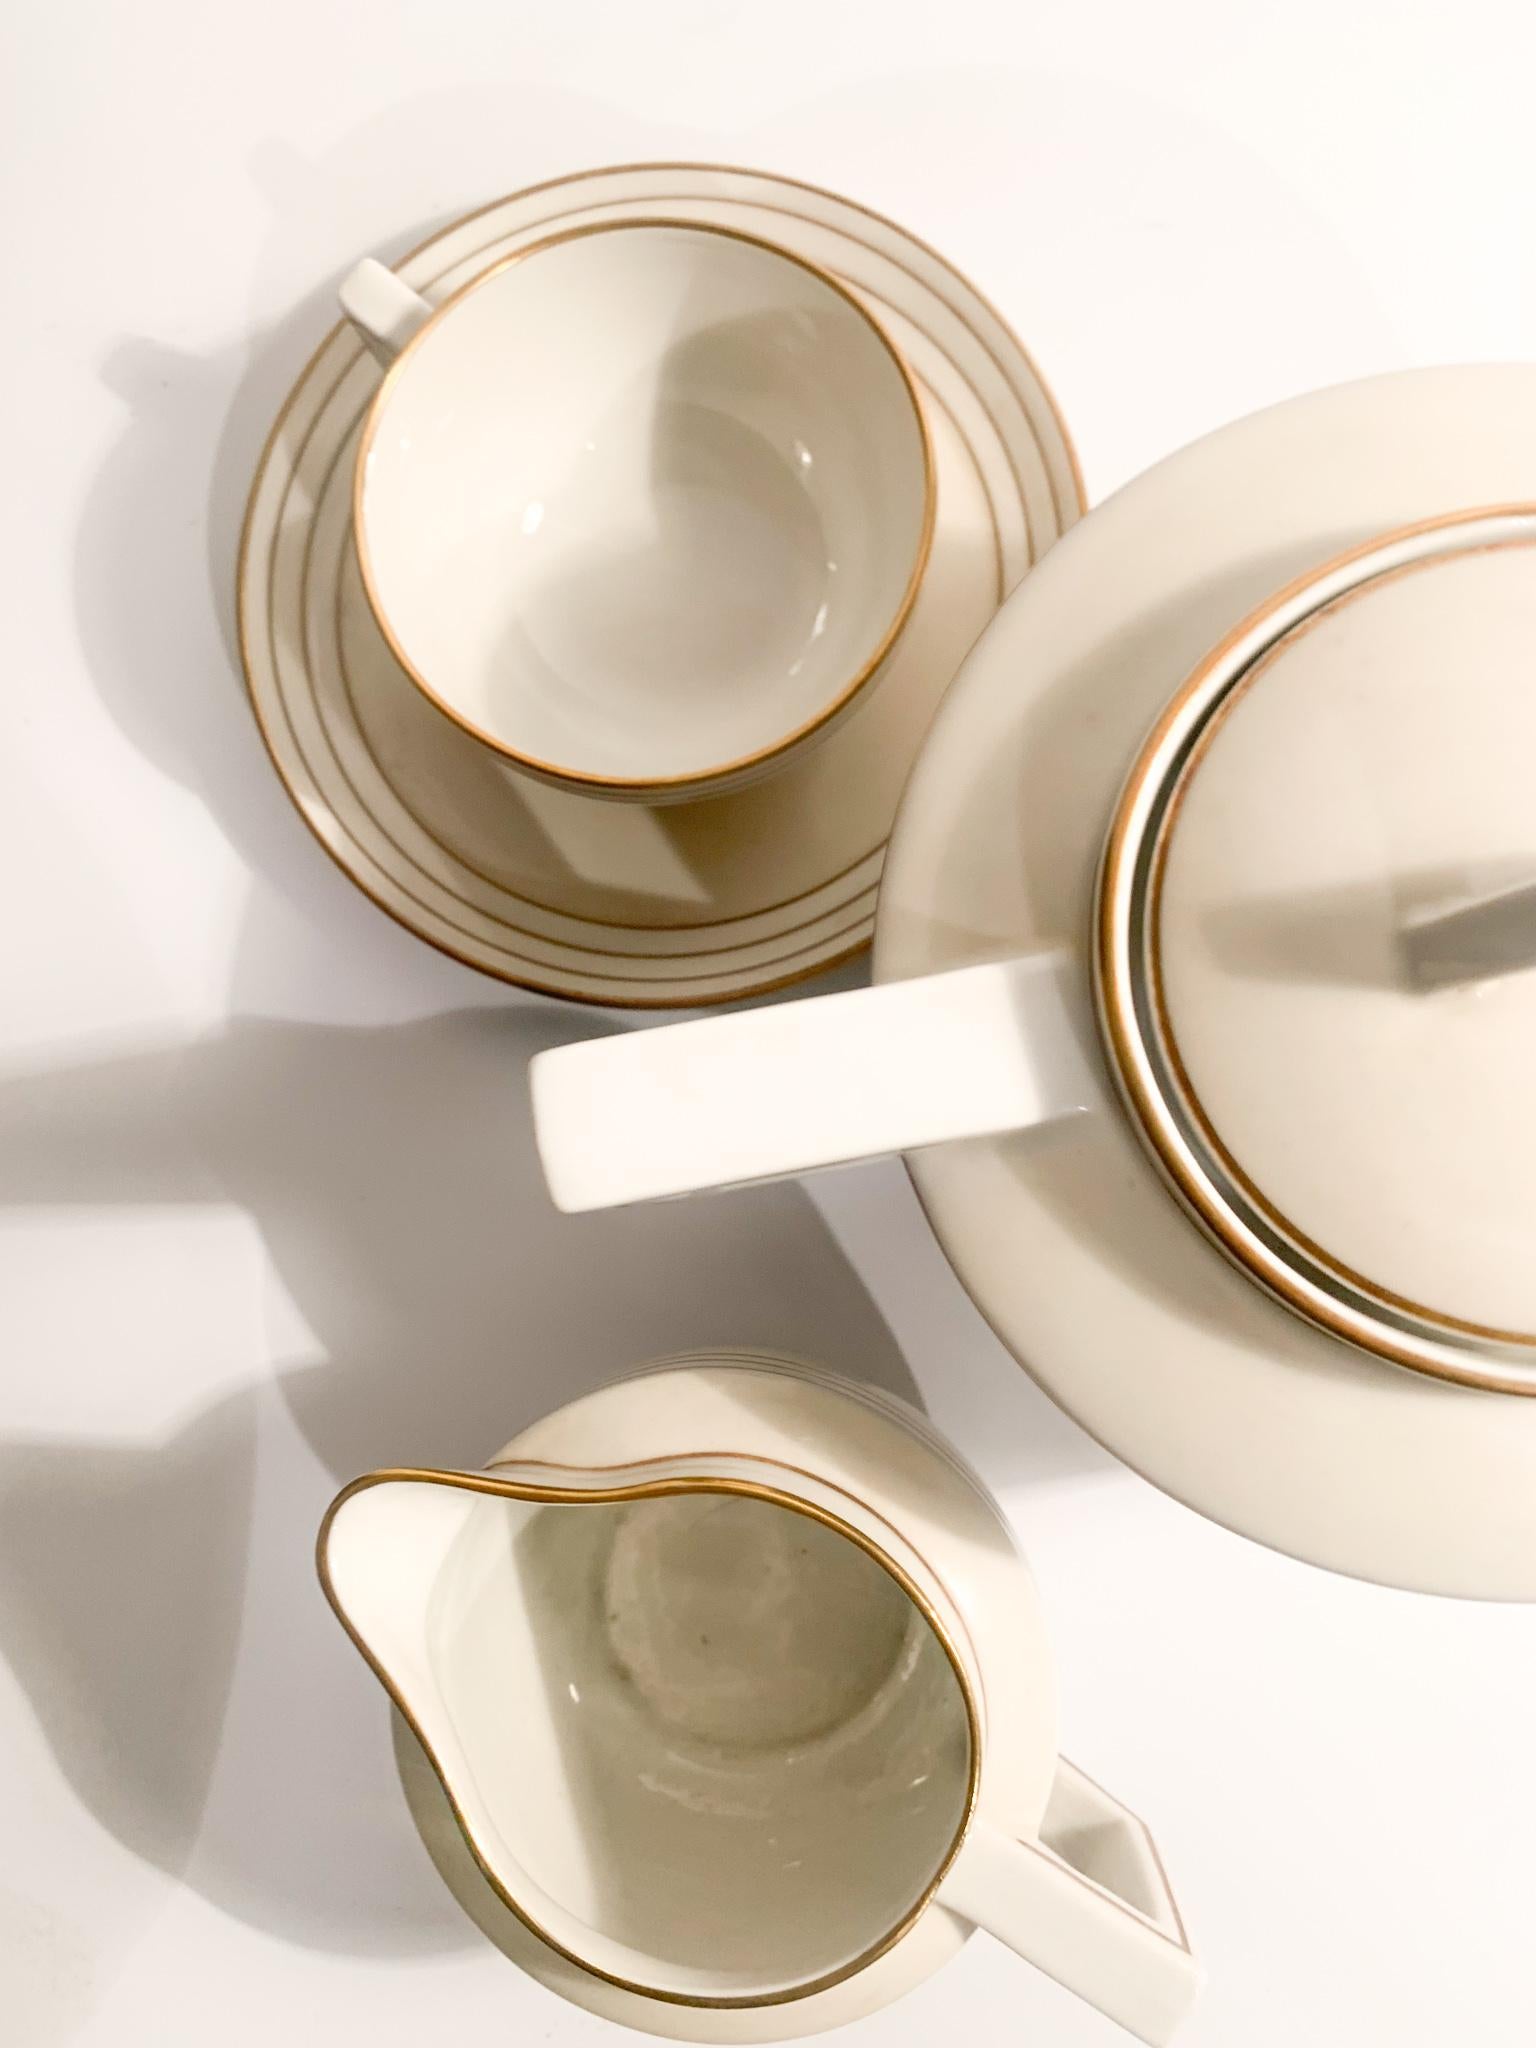 Twelve Richard Ginori Decò Tea Set in Porcelain from the 1940s For Sale 4